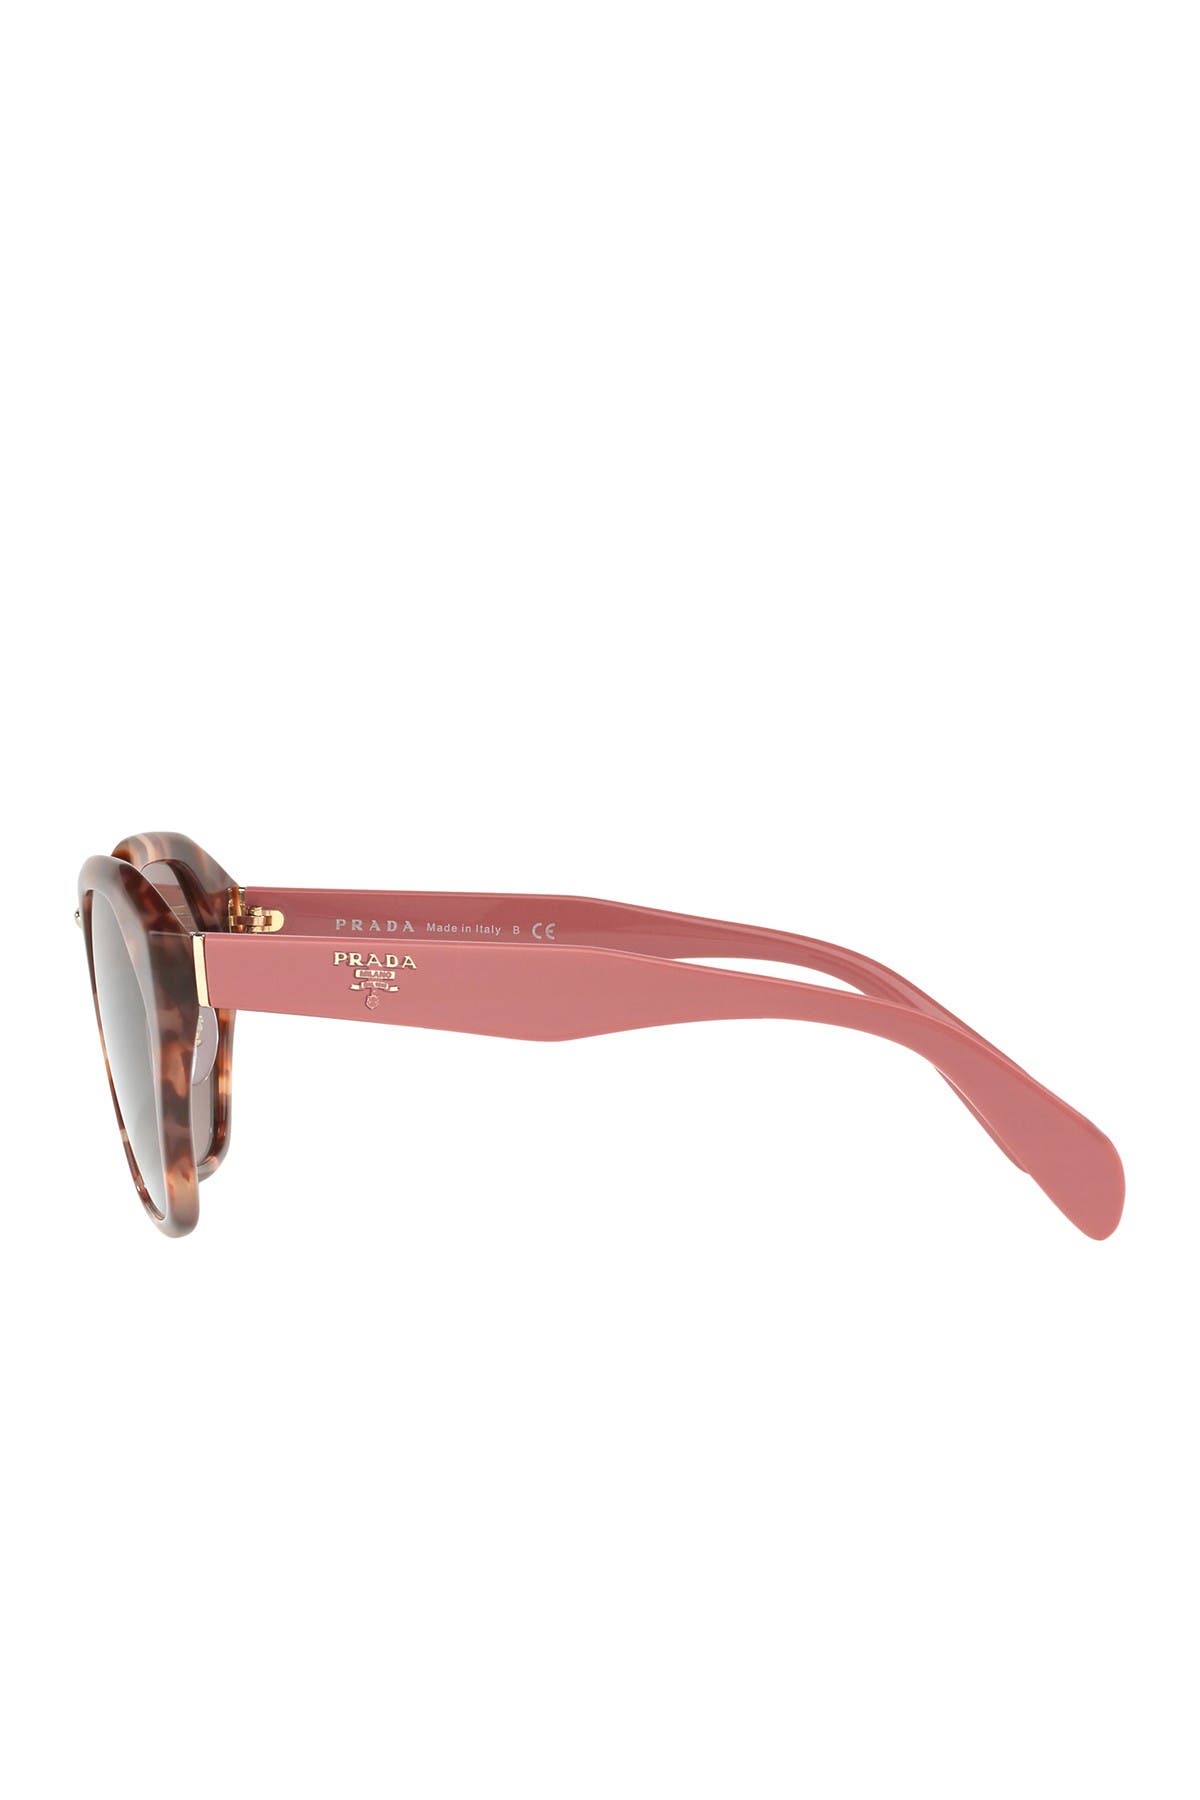 prada irregular heritage 55mm cat eye sunglasses